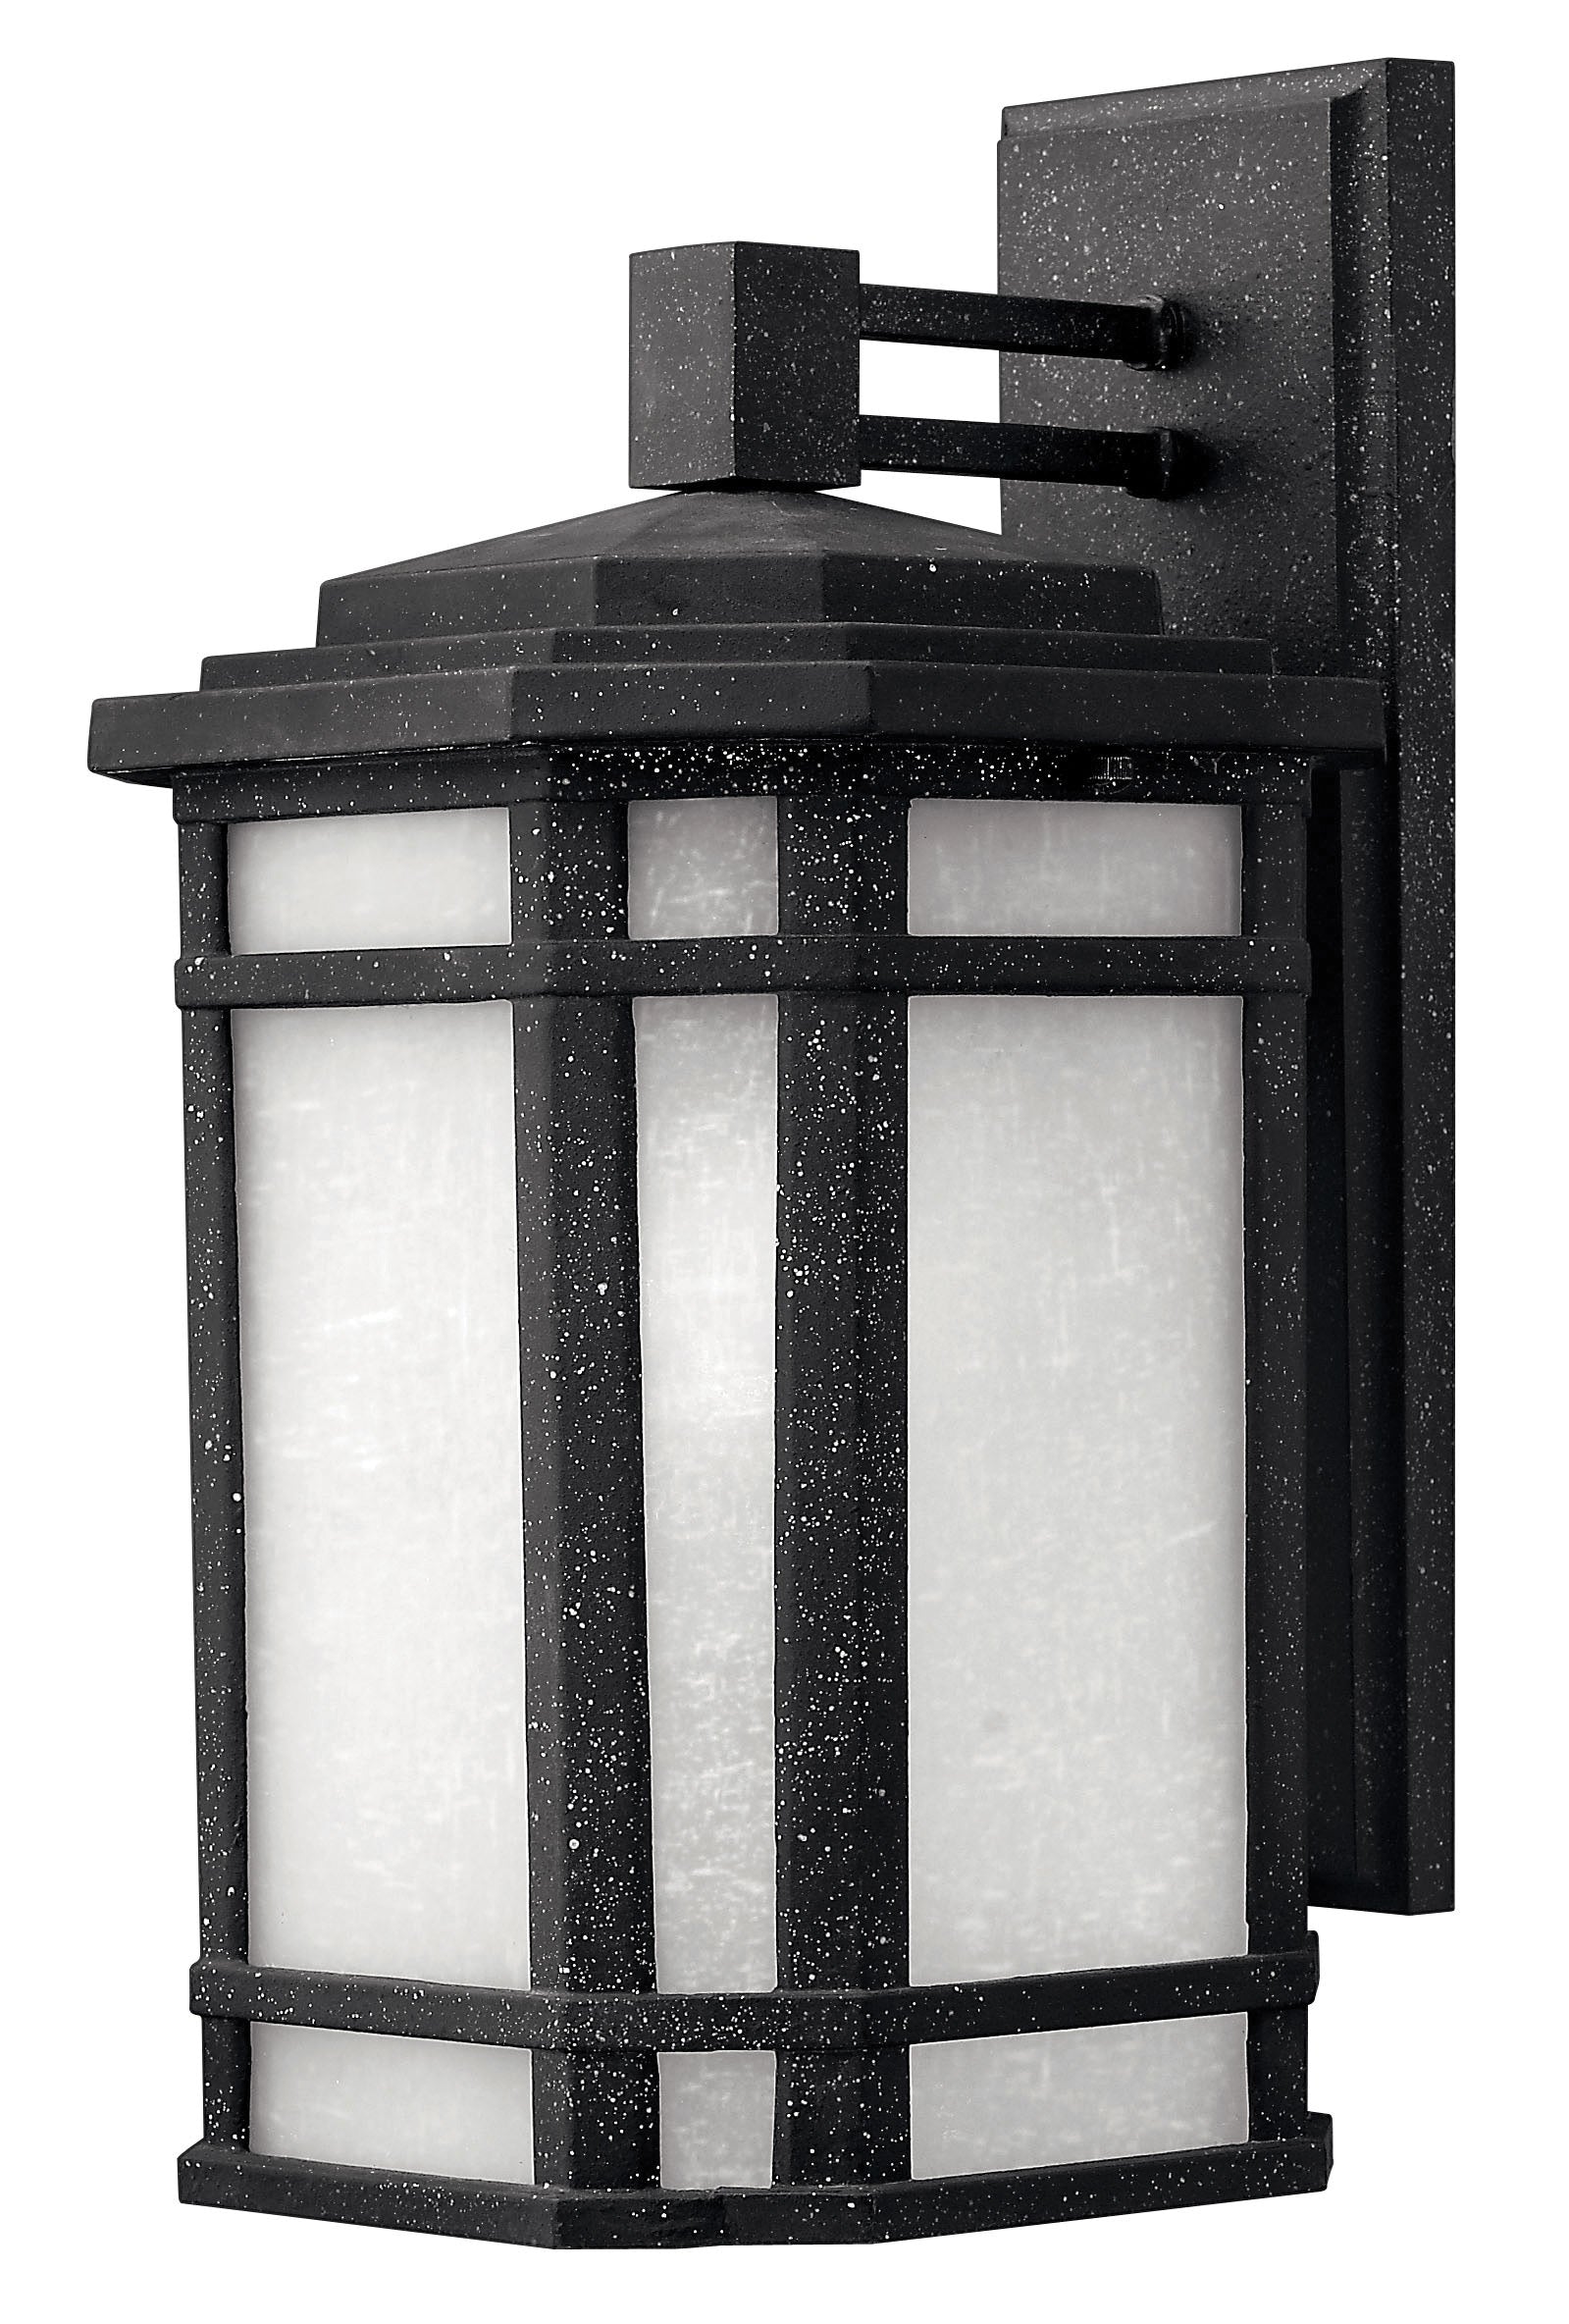 CHERRY CREEK Outdoor sconce Black INTEGRATED LED - 1274VK-LED | HINKLEY